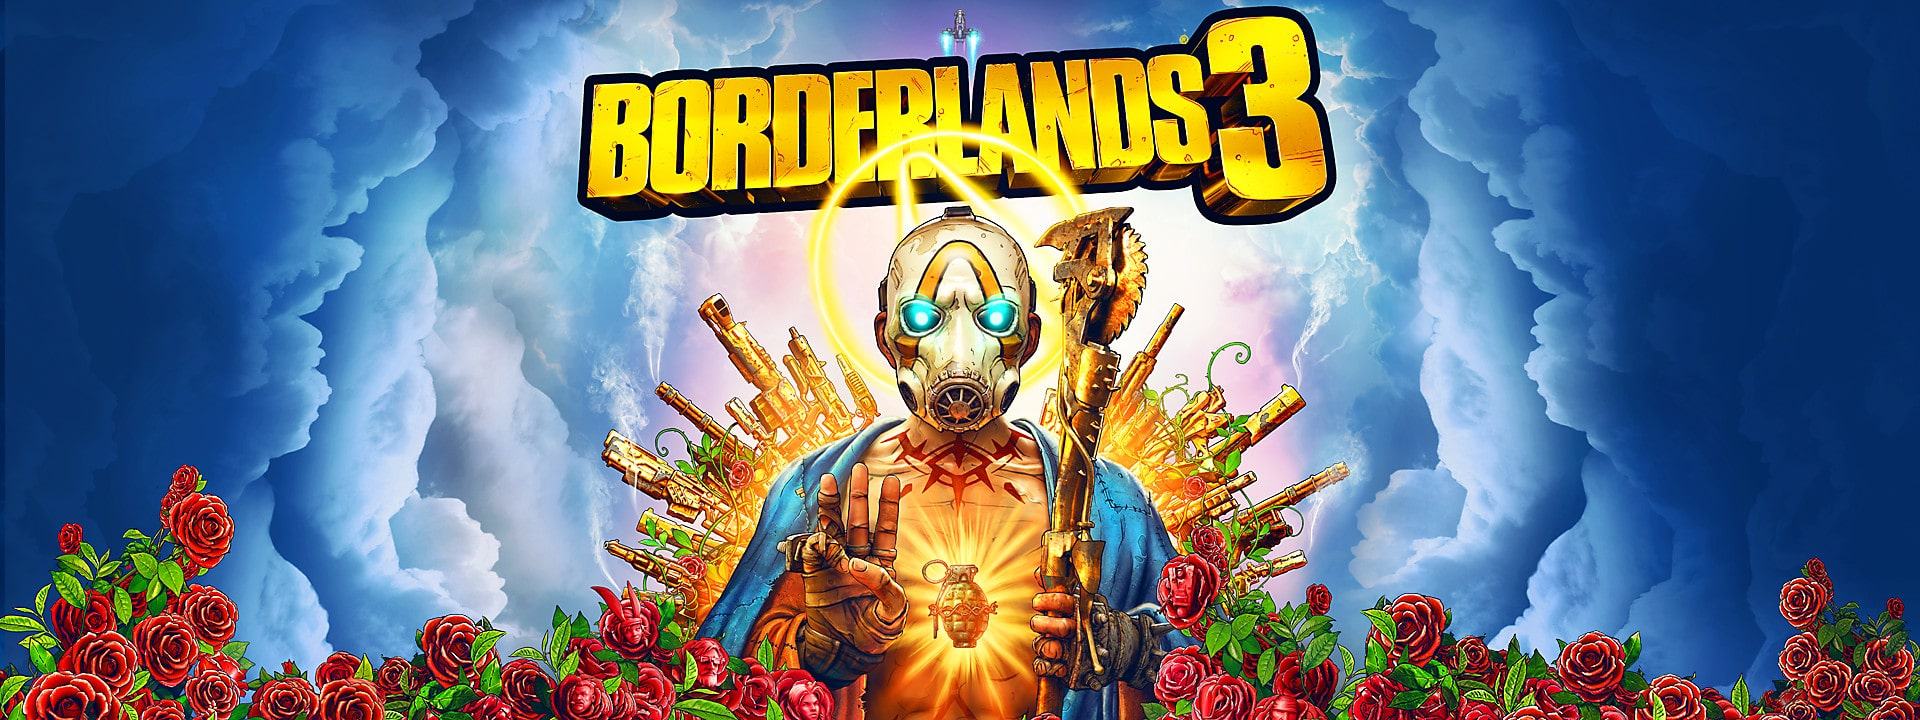 Il film su Borderlands è ufficiale, dirigerà Eli Roth 2